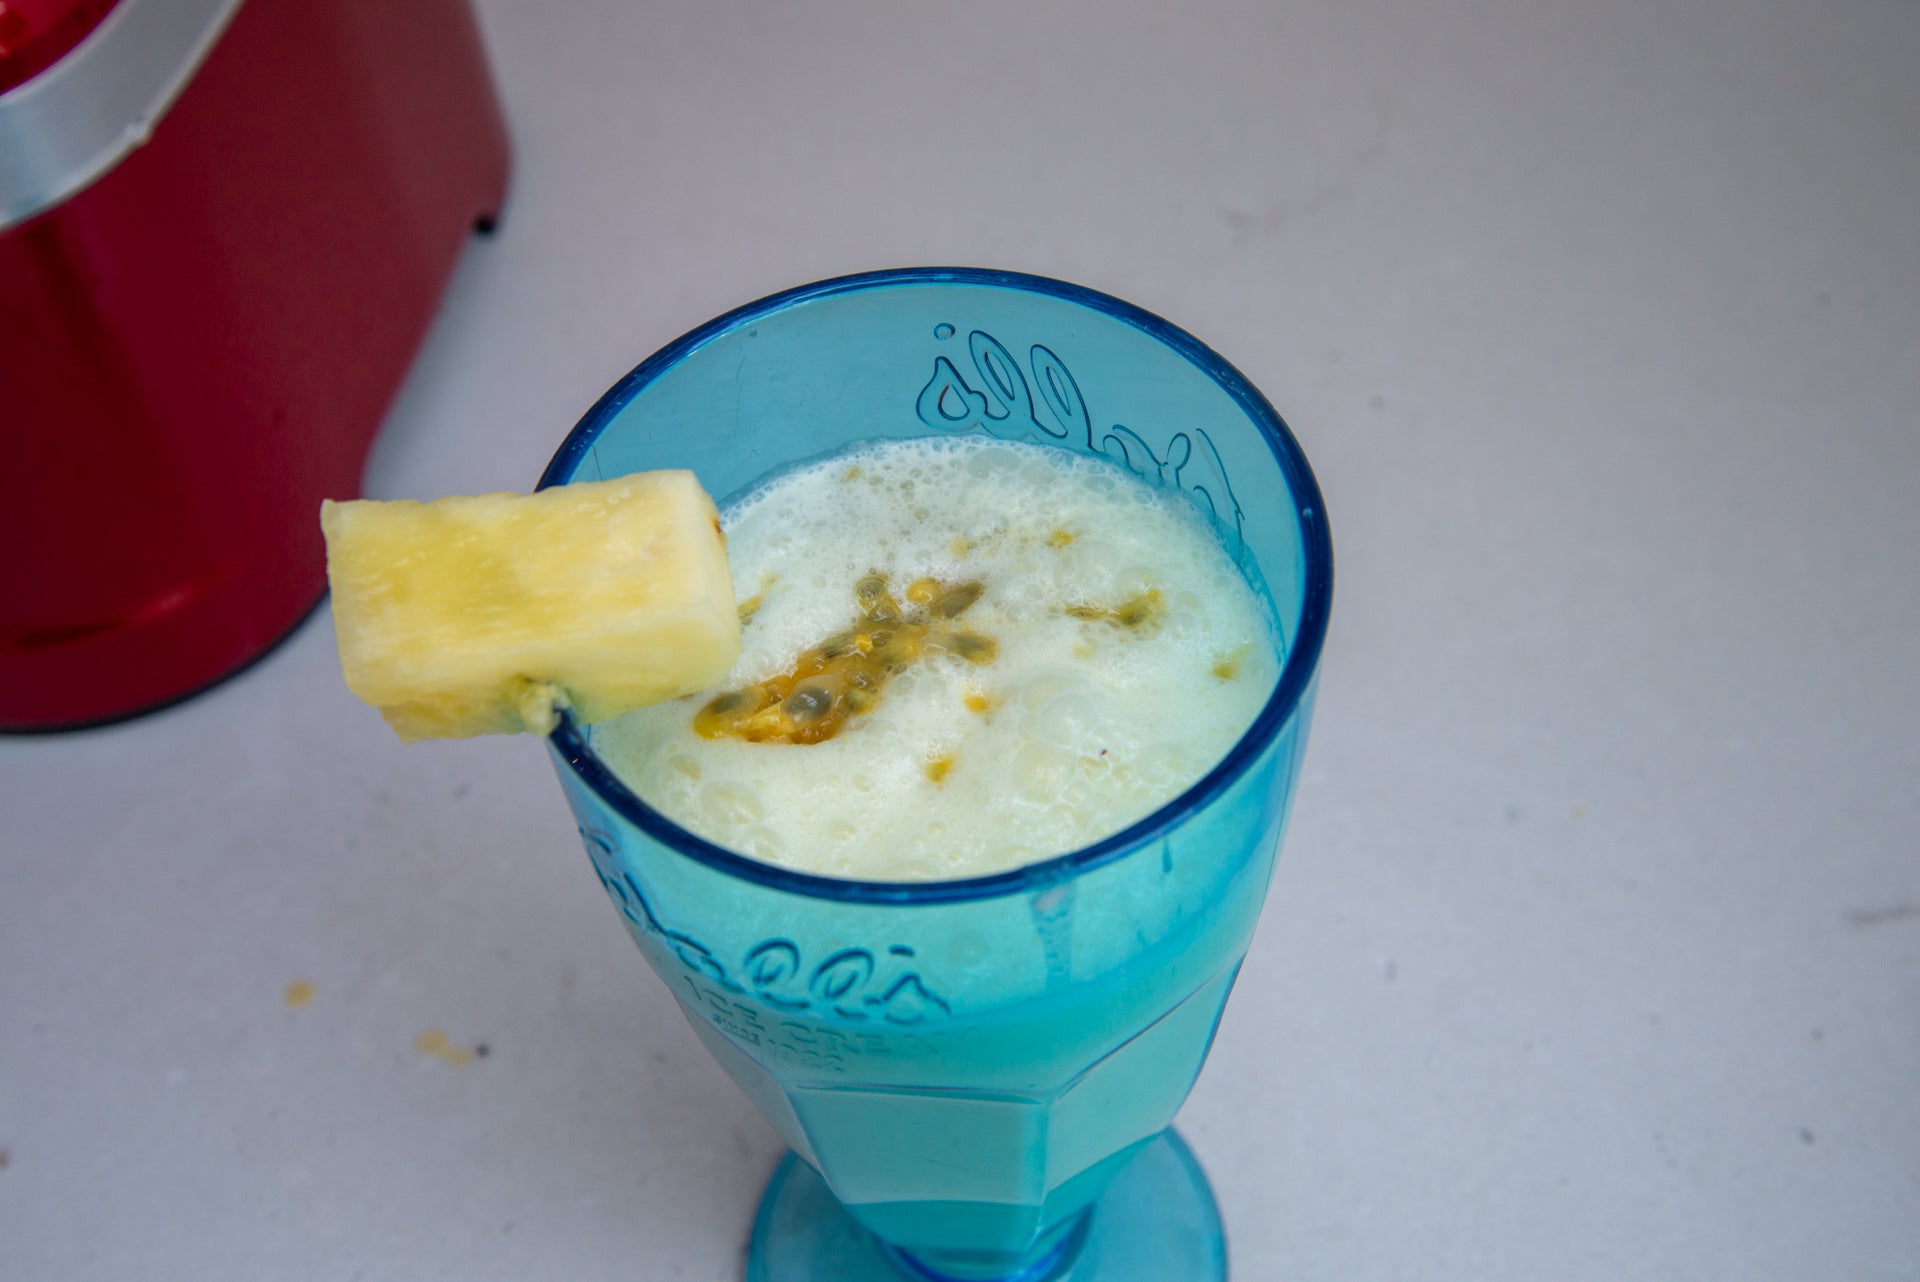 KitchenAid Artisan Blender K400 pineapple smoothie in a glass